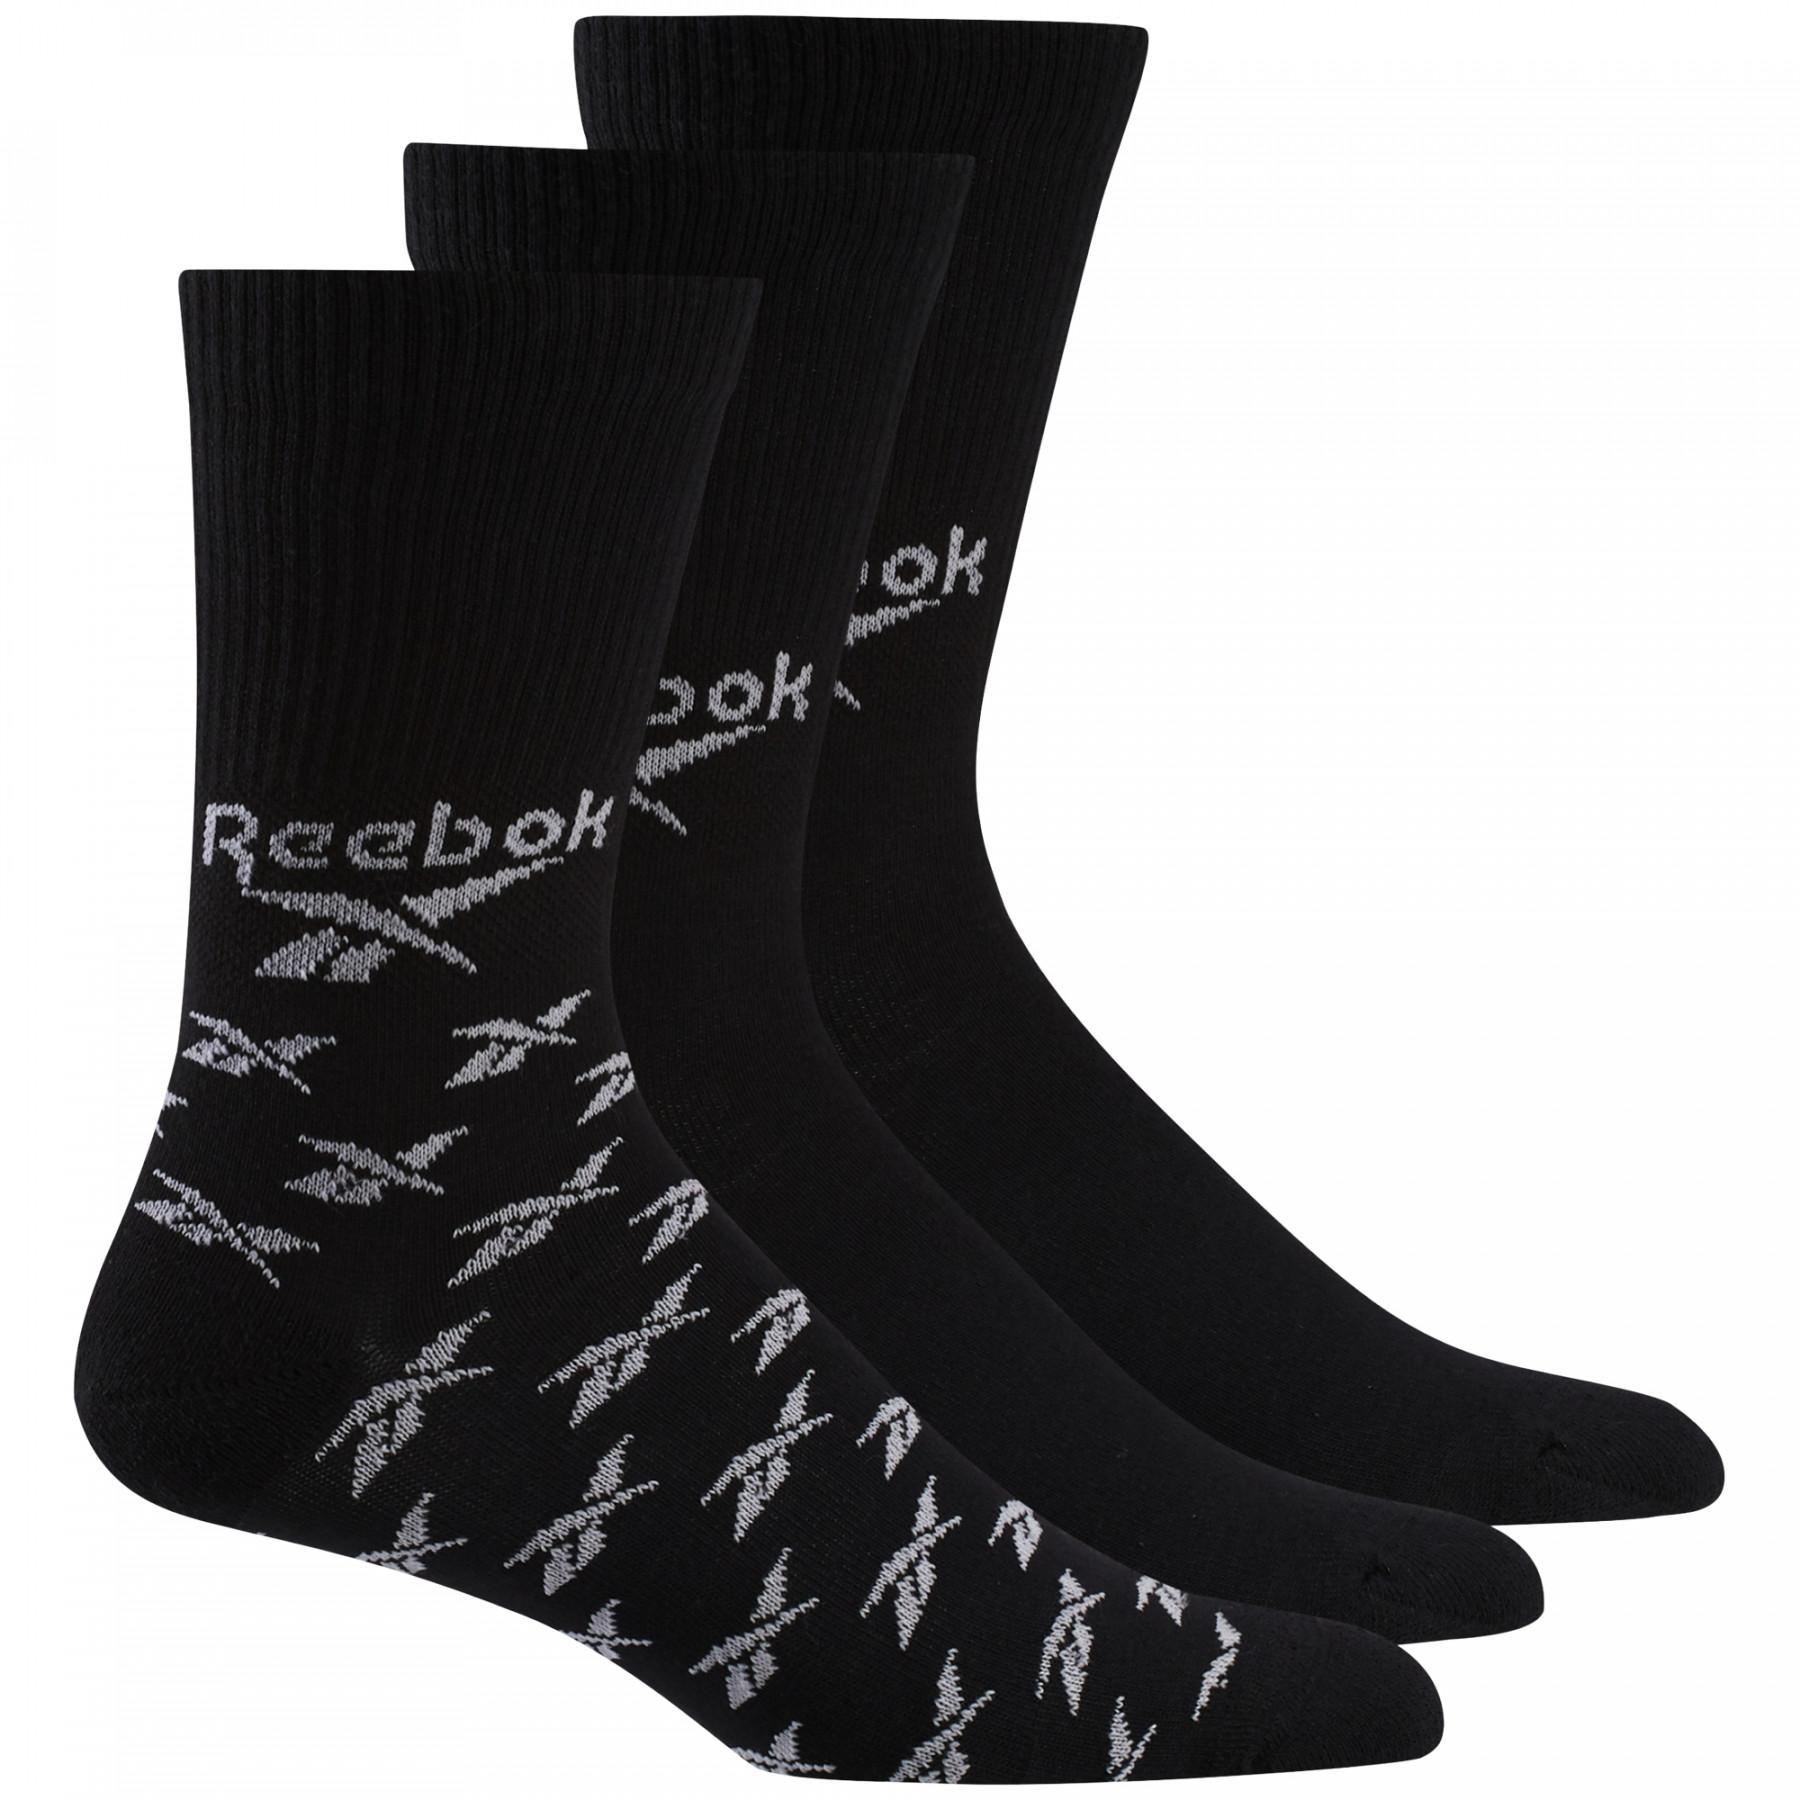 Set of 3 pairs of socks Reebok Classics Fold-Over